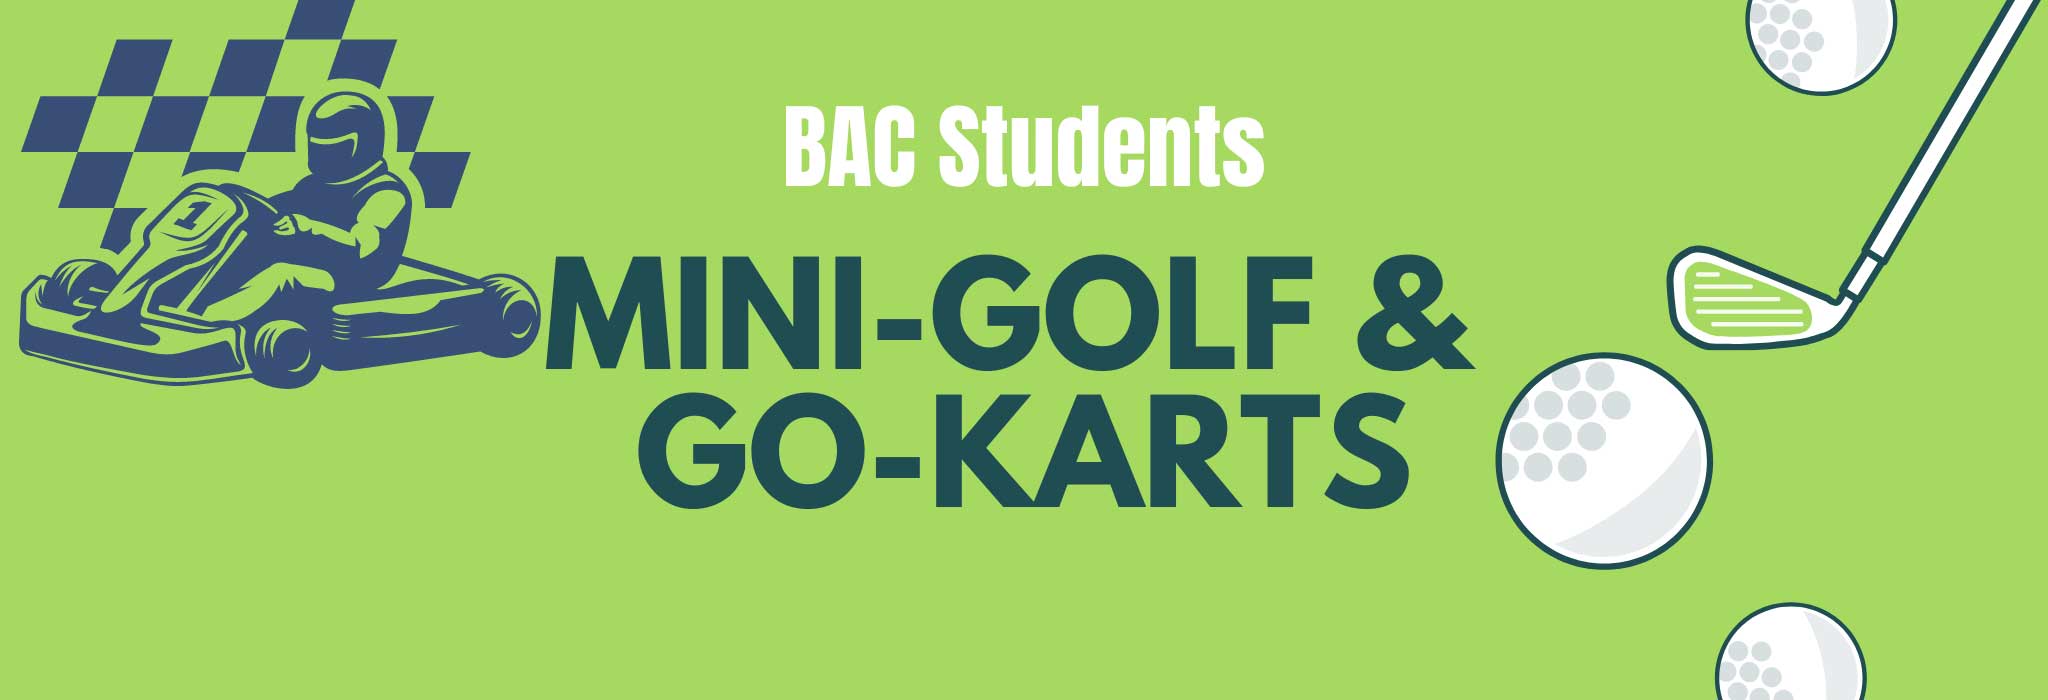 BAC Students Mini-Golf & Go-Karts